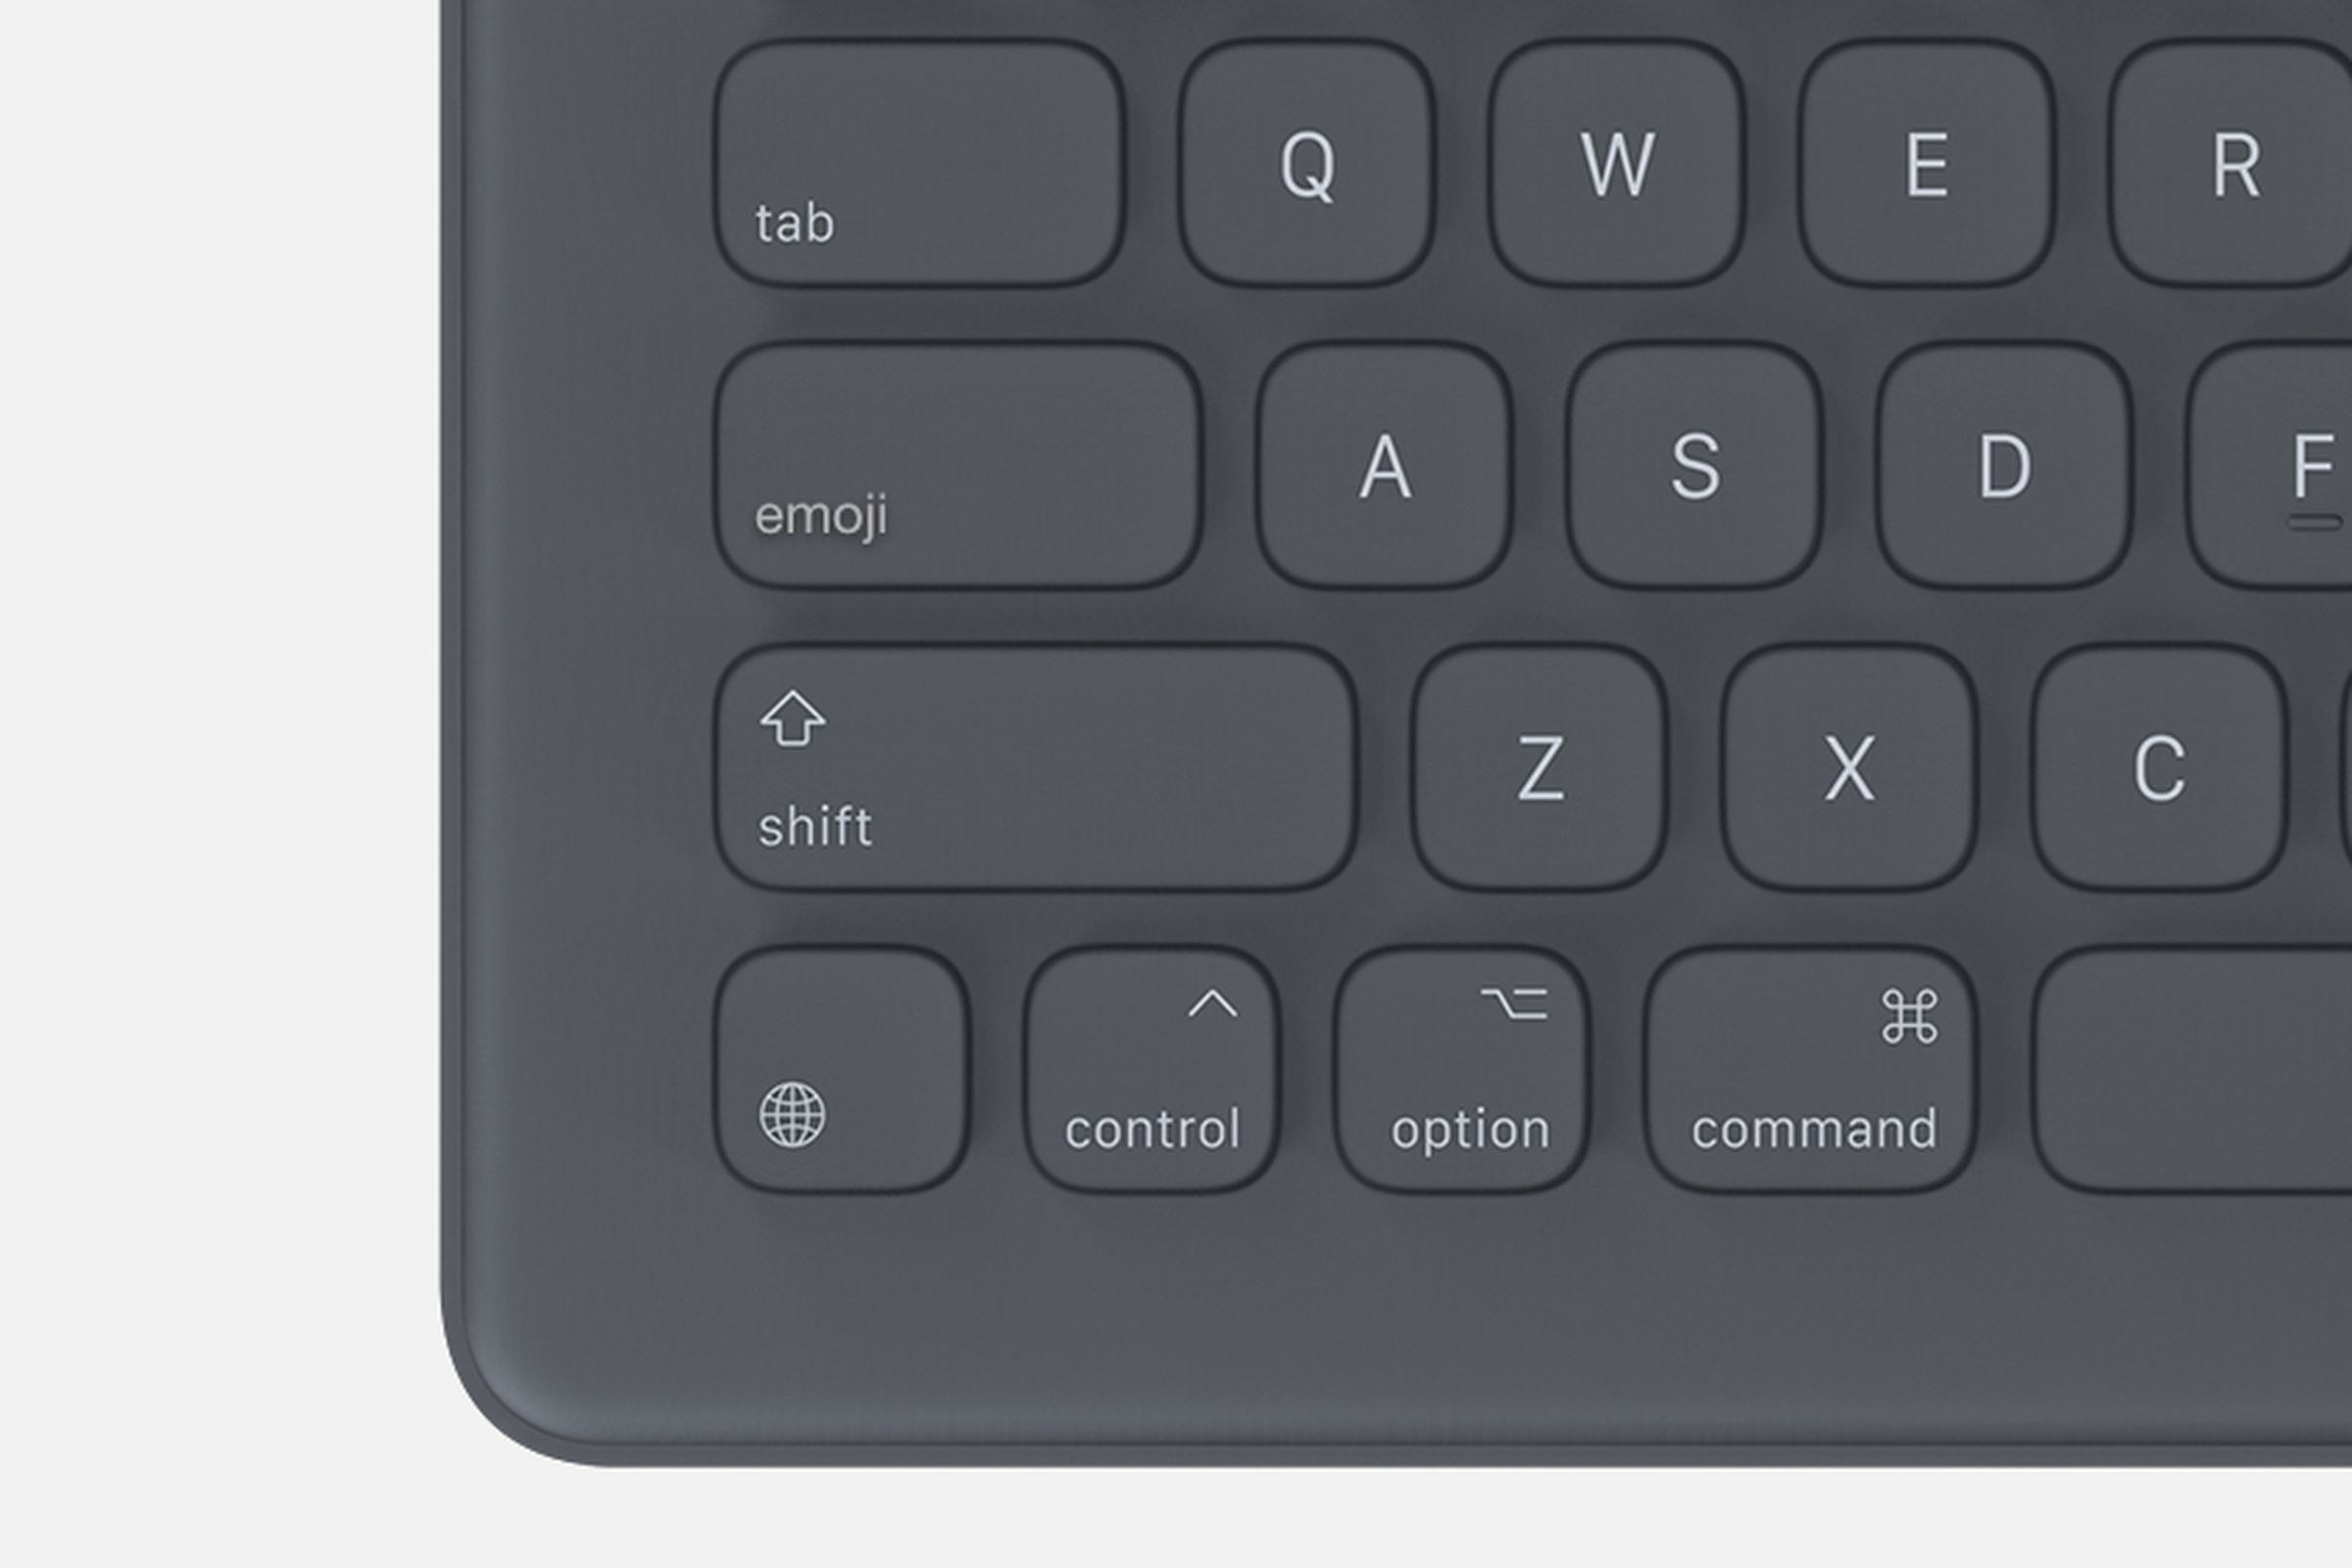 A mock-up showing Apple’s Smart Keyboard with an emoji key. 